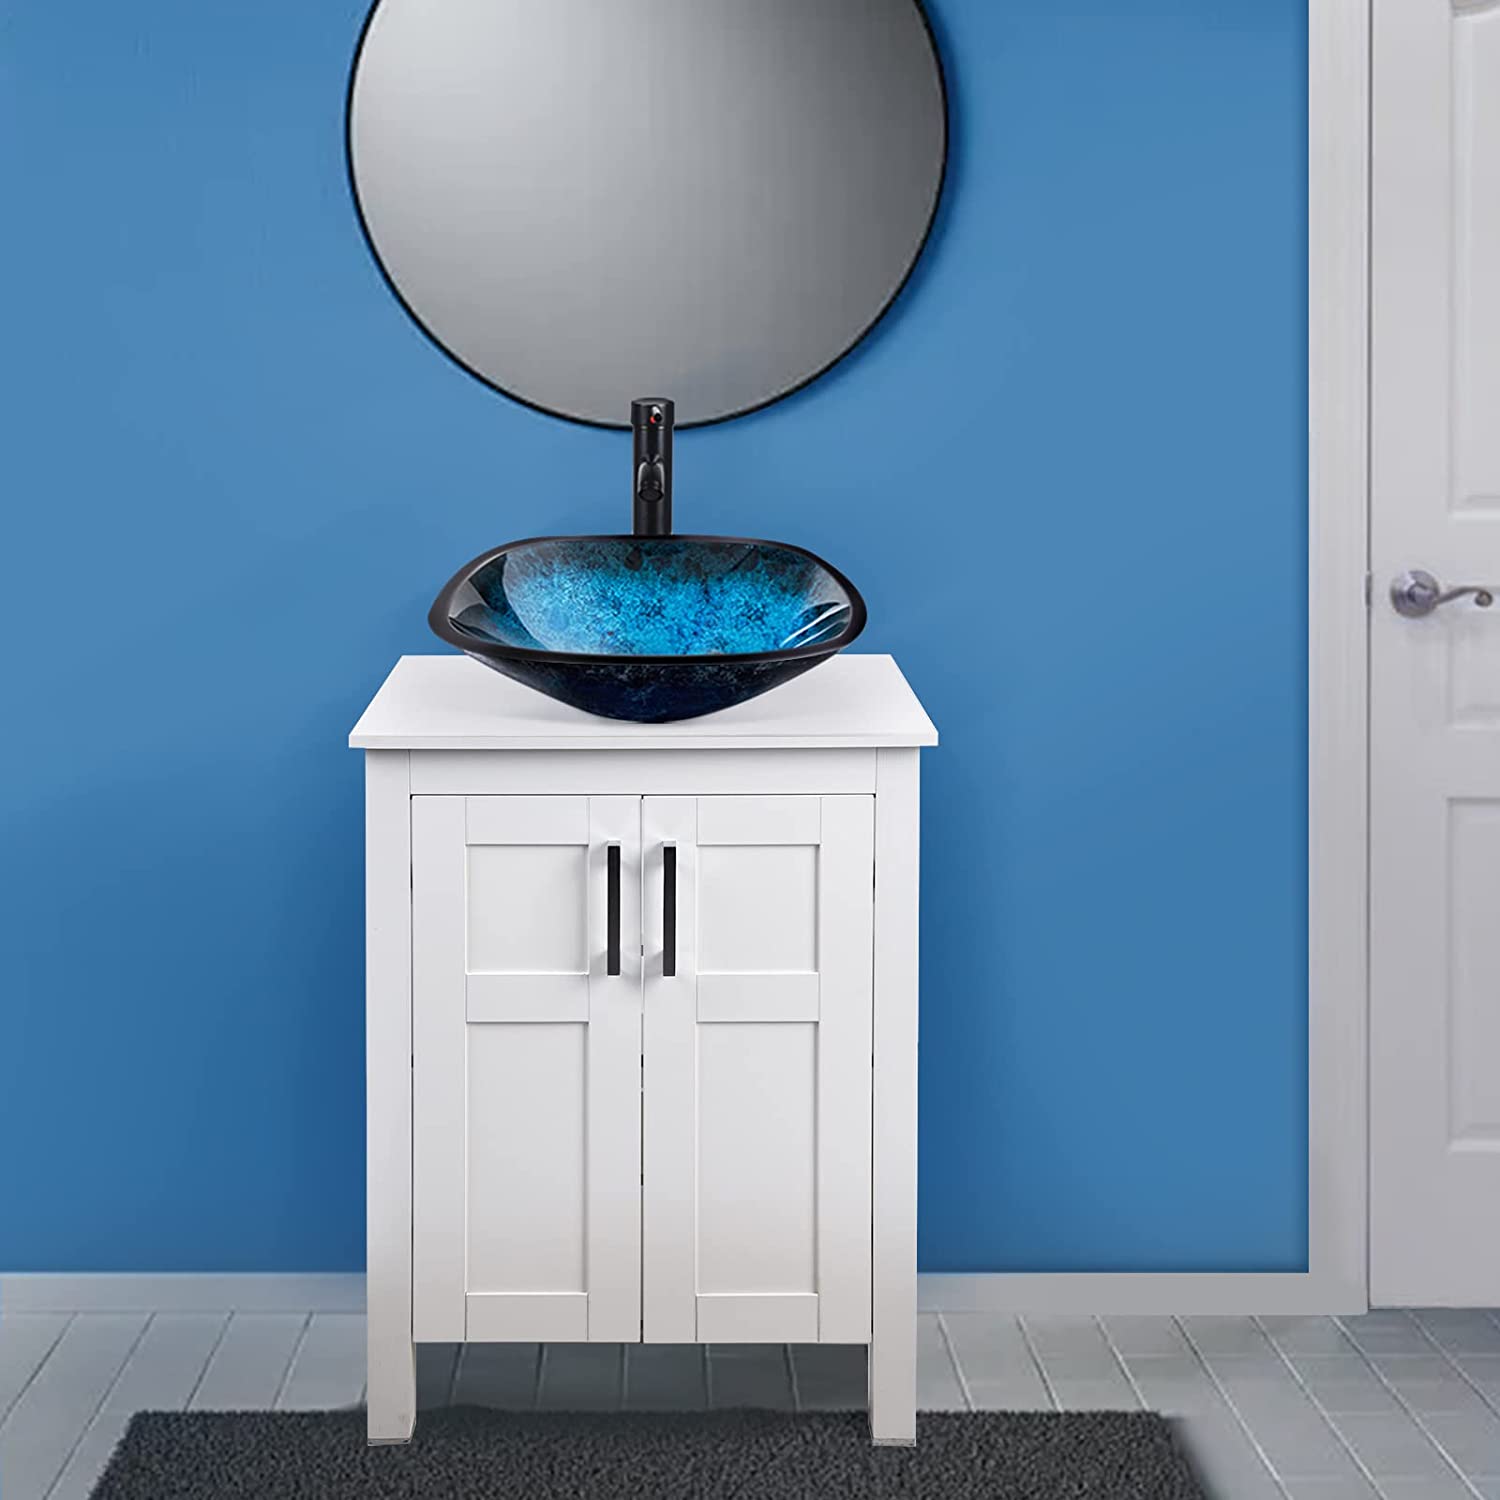 Elecwish White Bathroom Vanity and Square Blue Sink Set HW1120-WH display scene